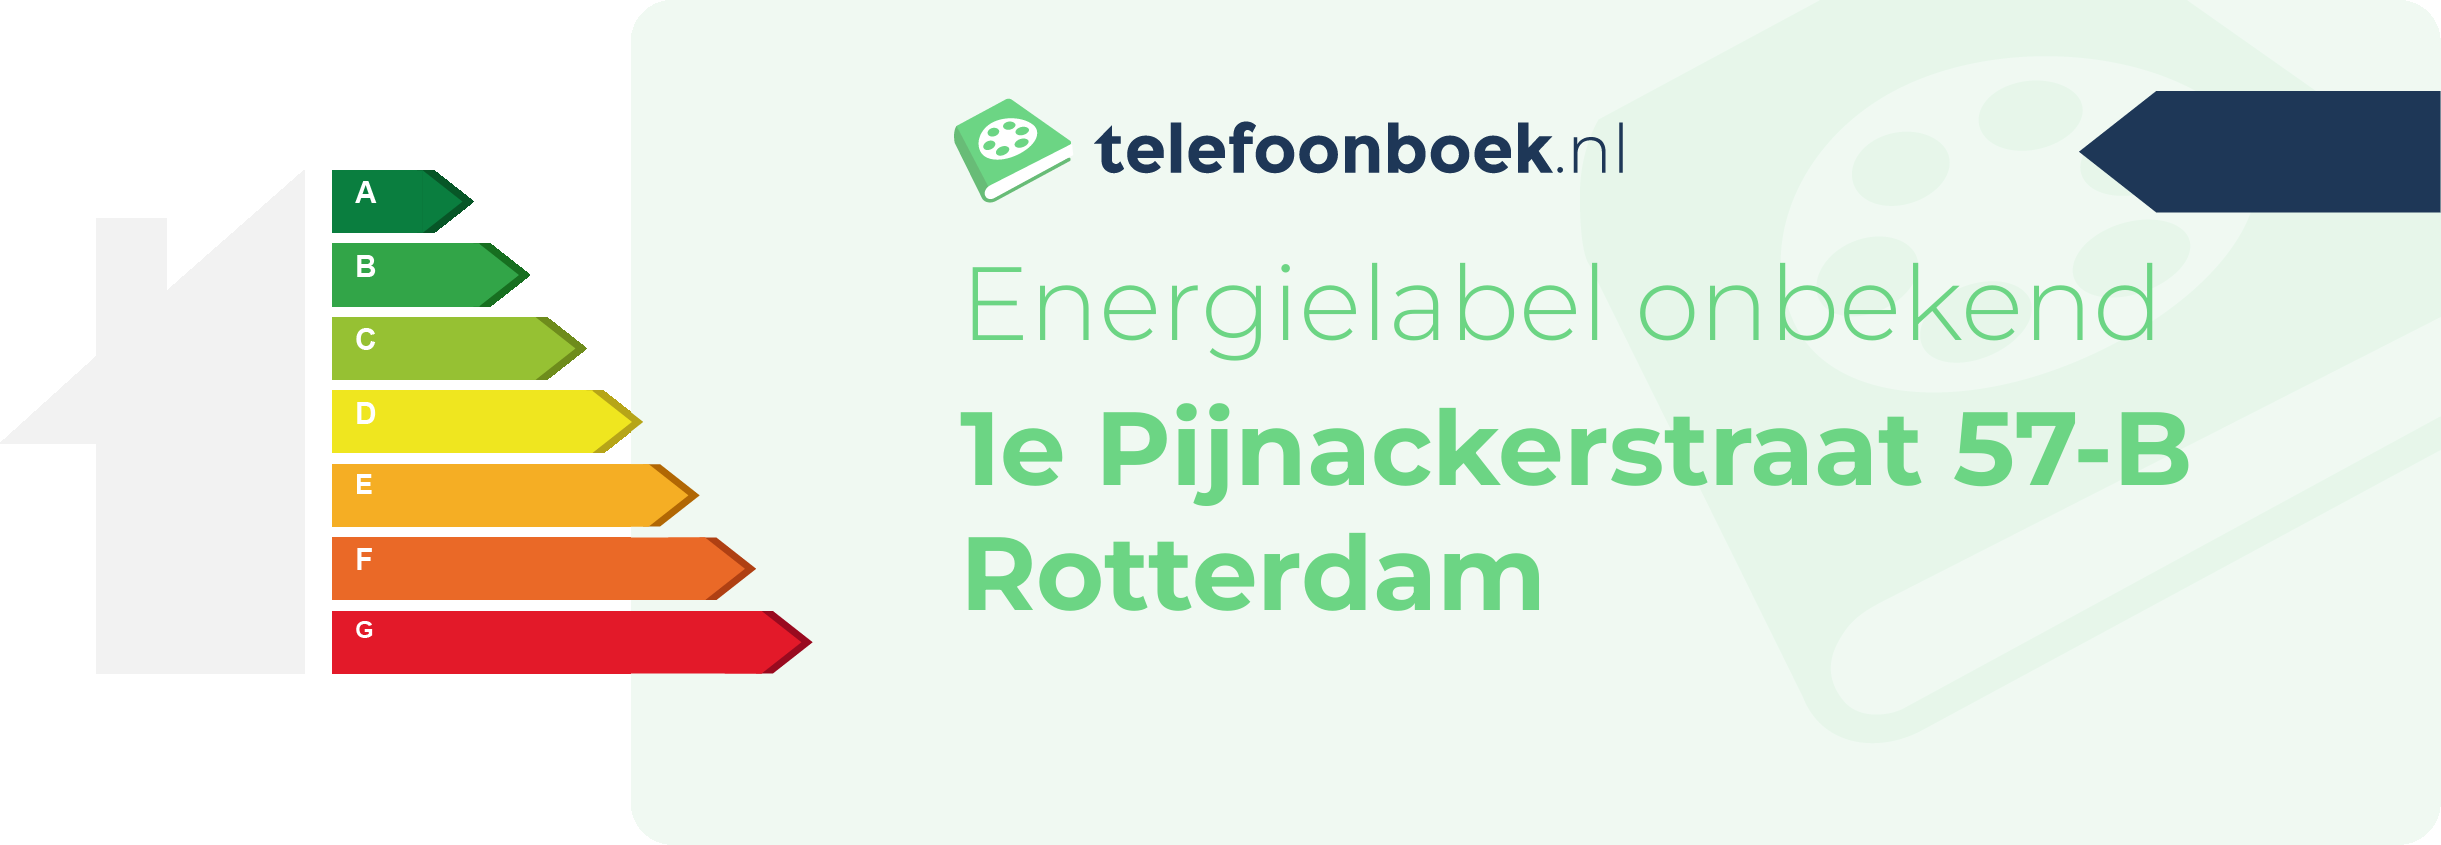 Energielabel 1e Pijnackerstraat 57-B Rotterdam